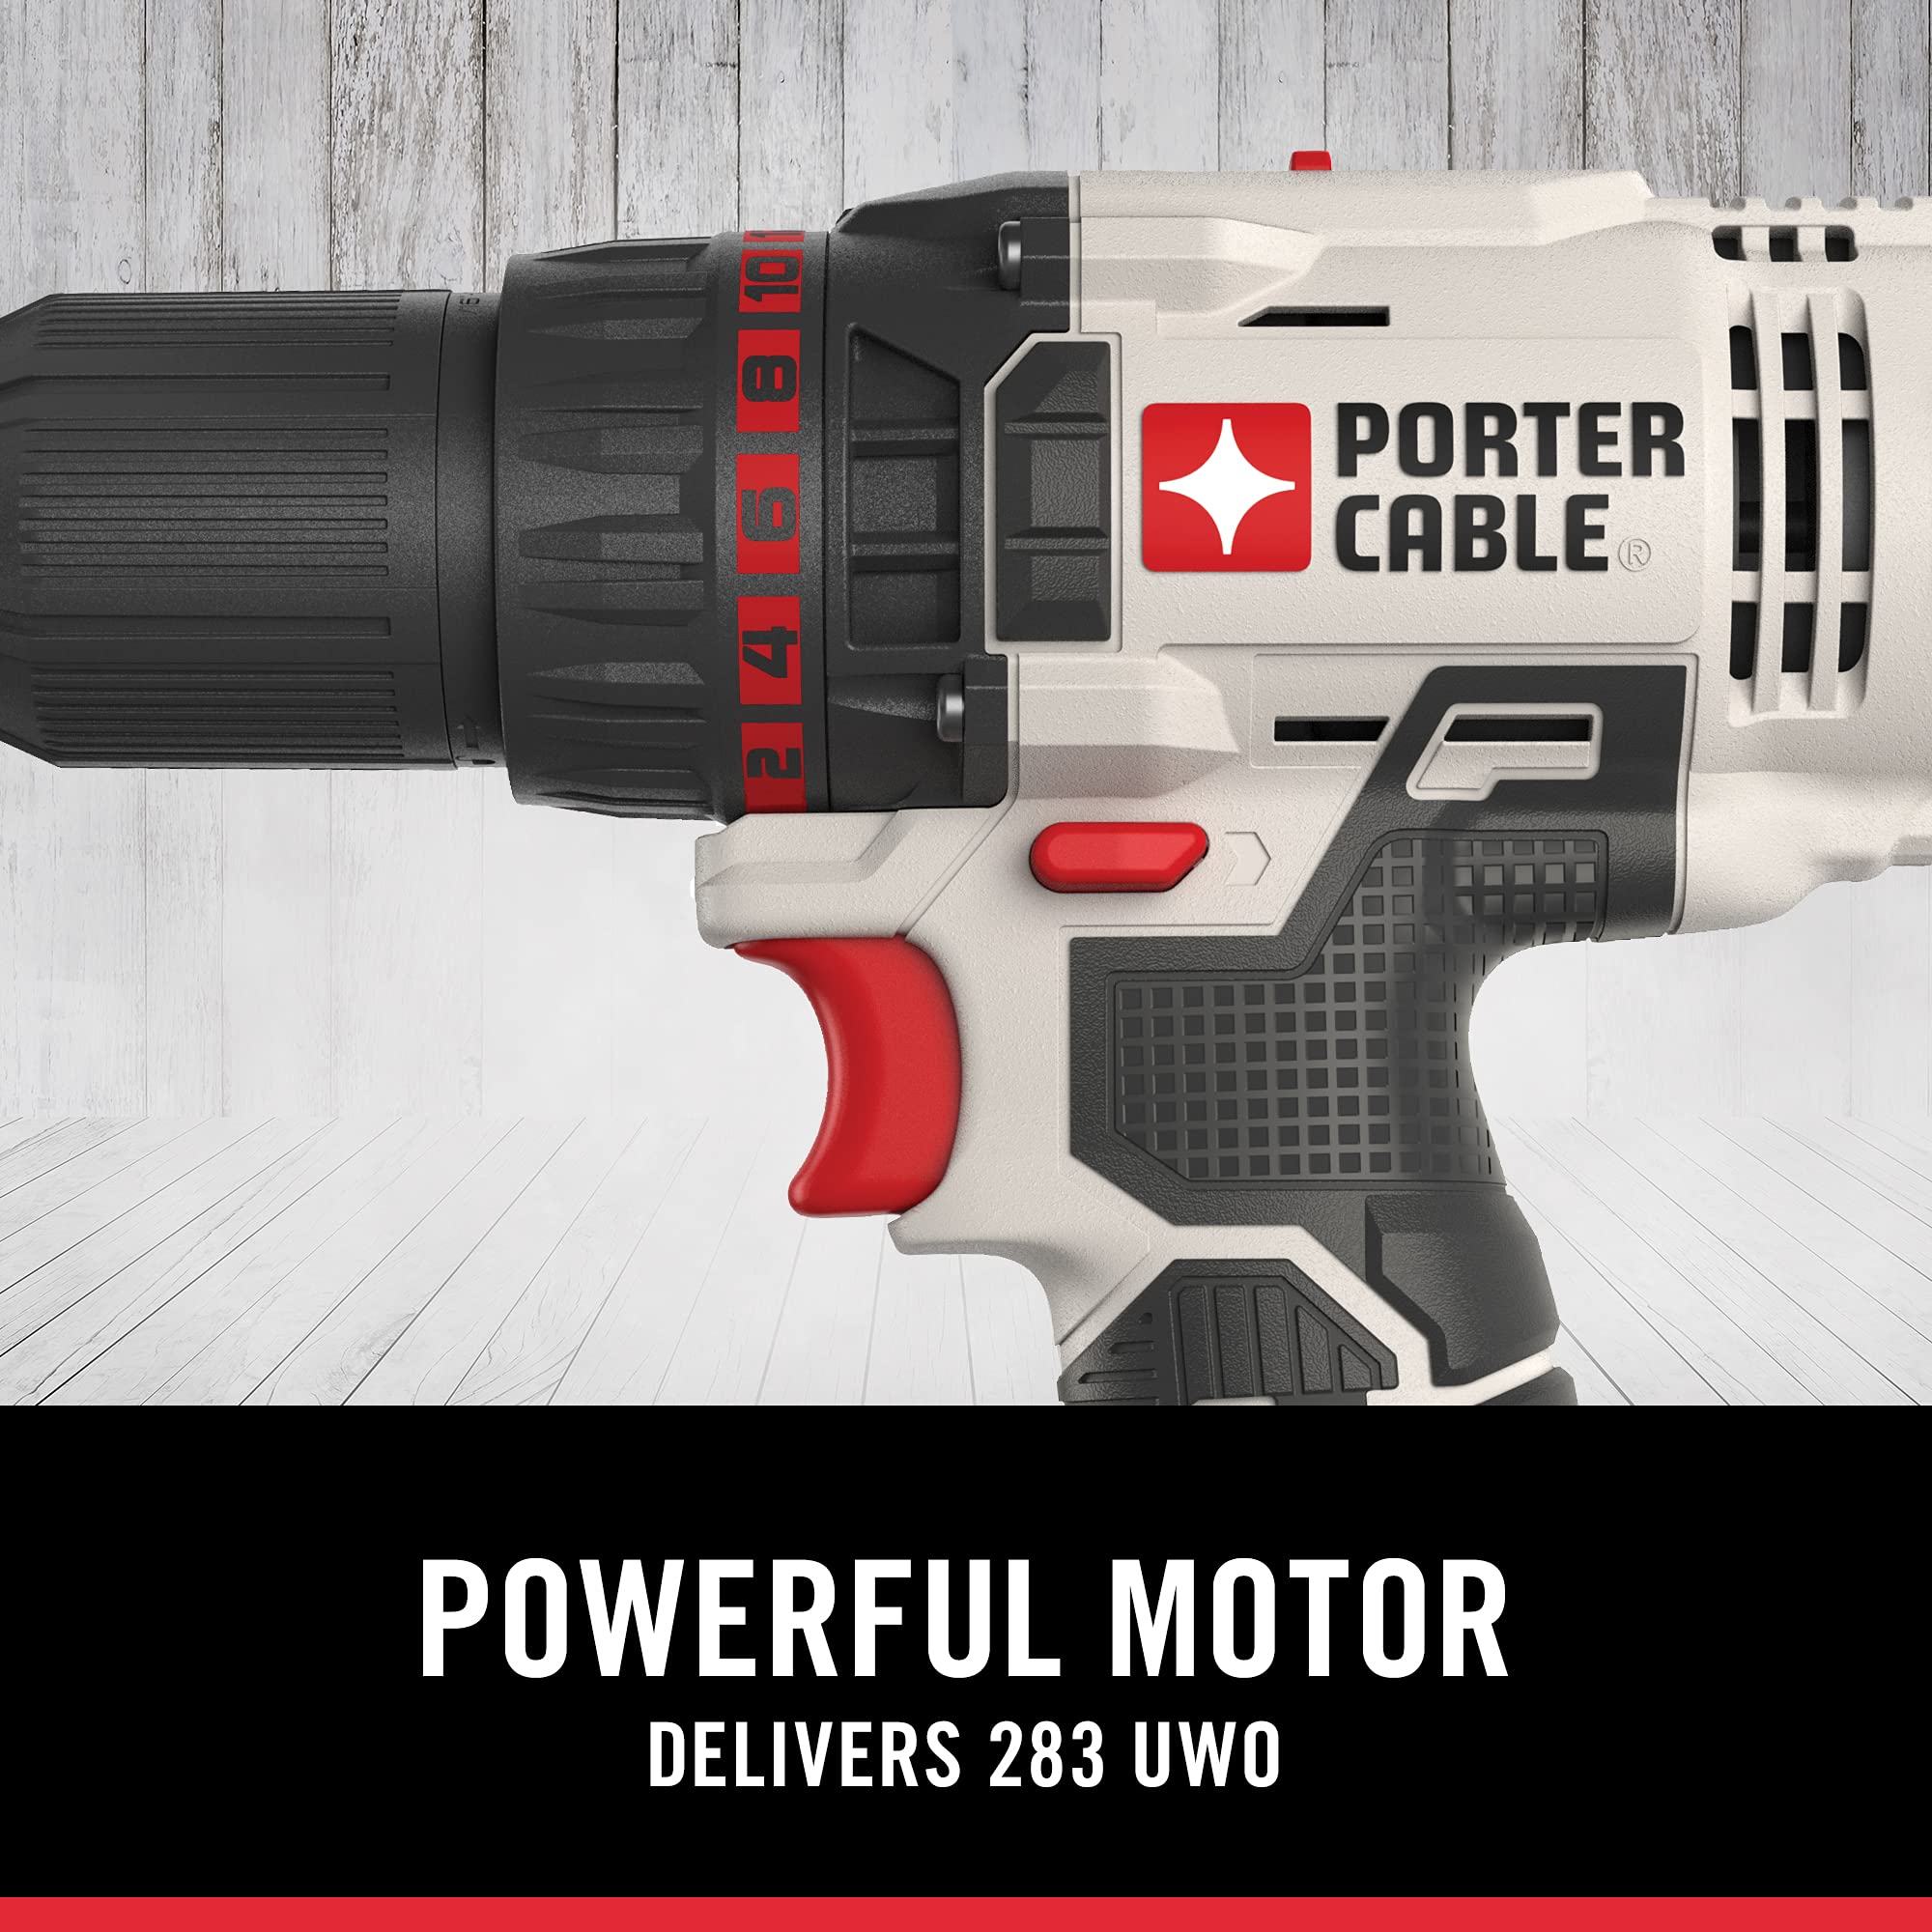 PORTER-CABLE 20V MAX* Cordless Drill Combo Kit and Impact Driver, 2-Tool (PCCK604L2)